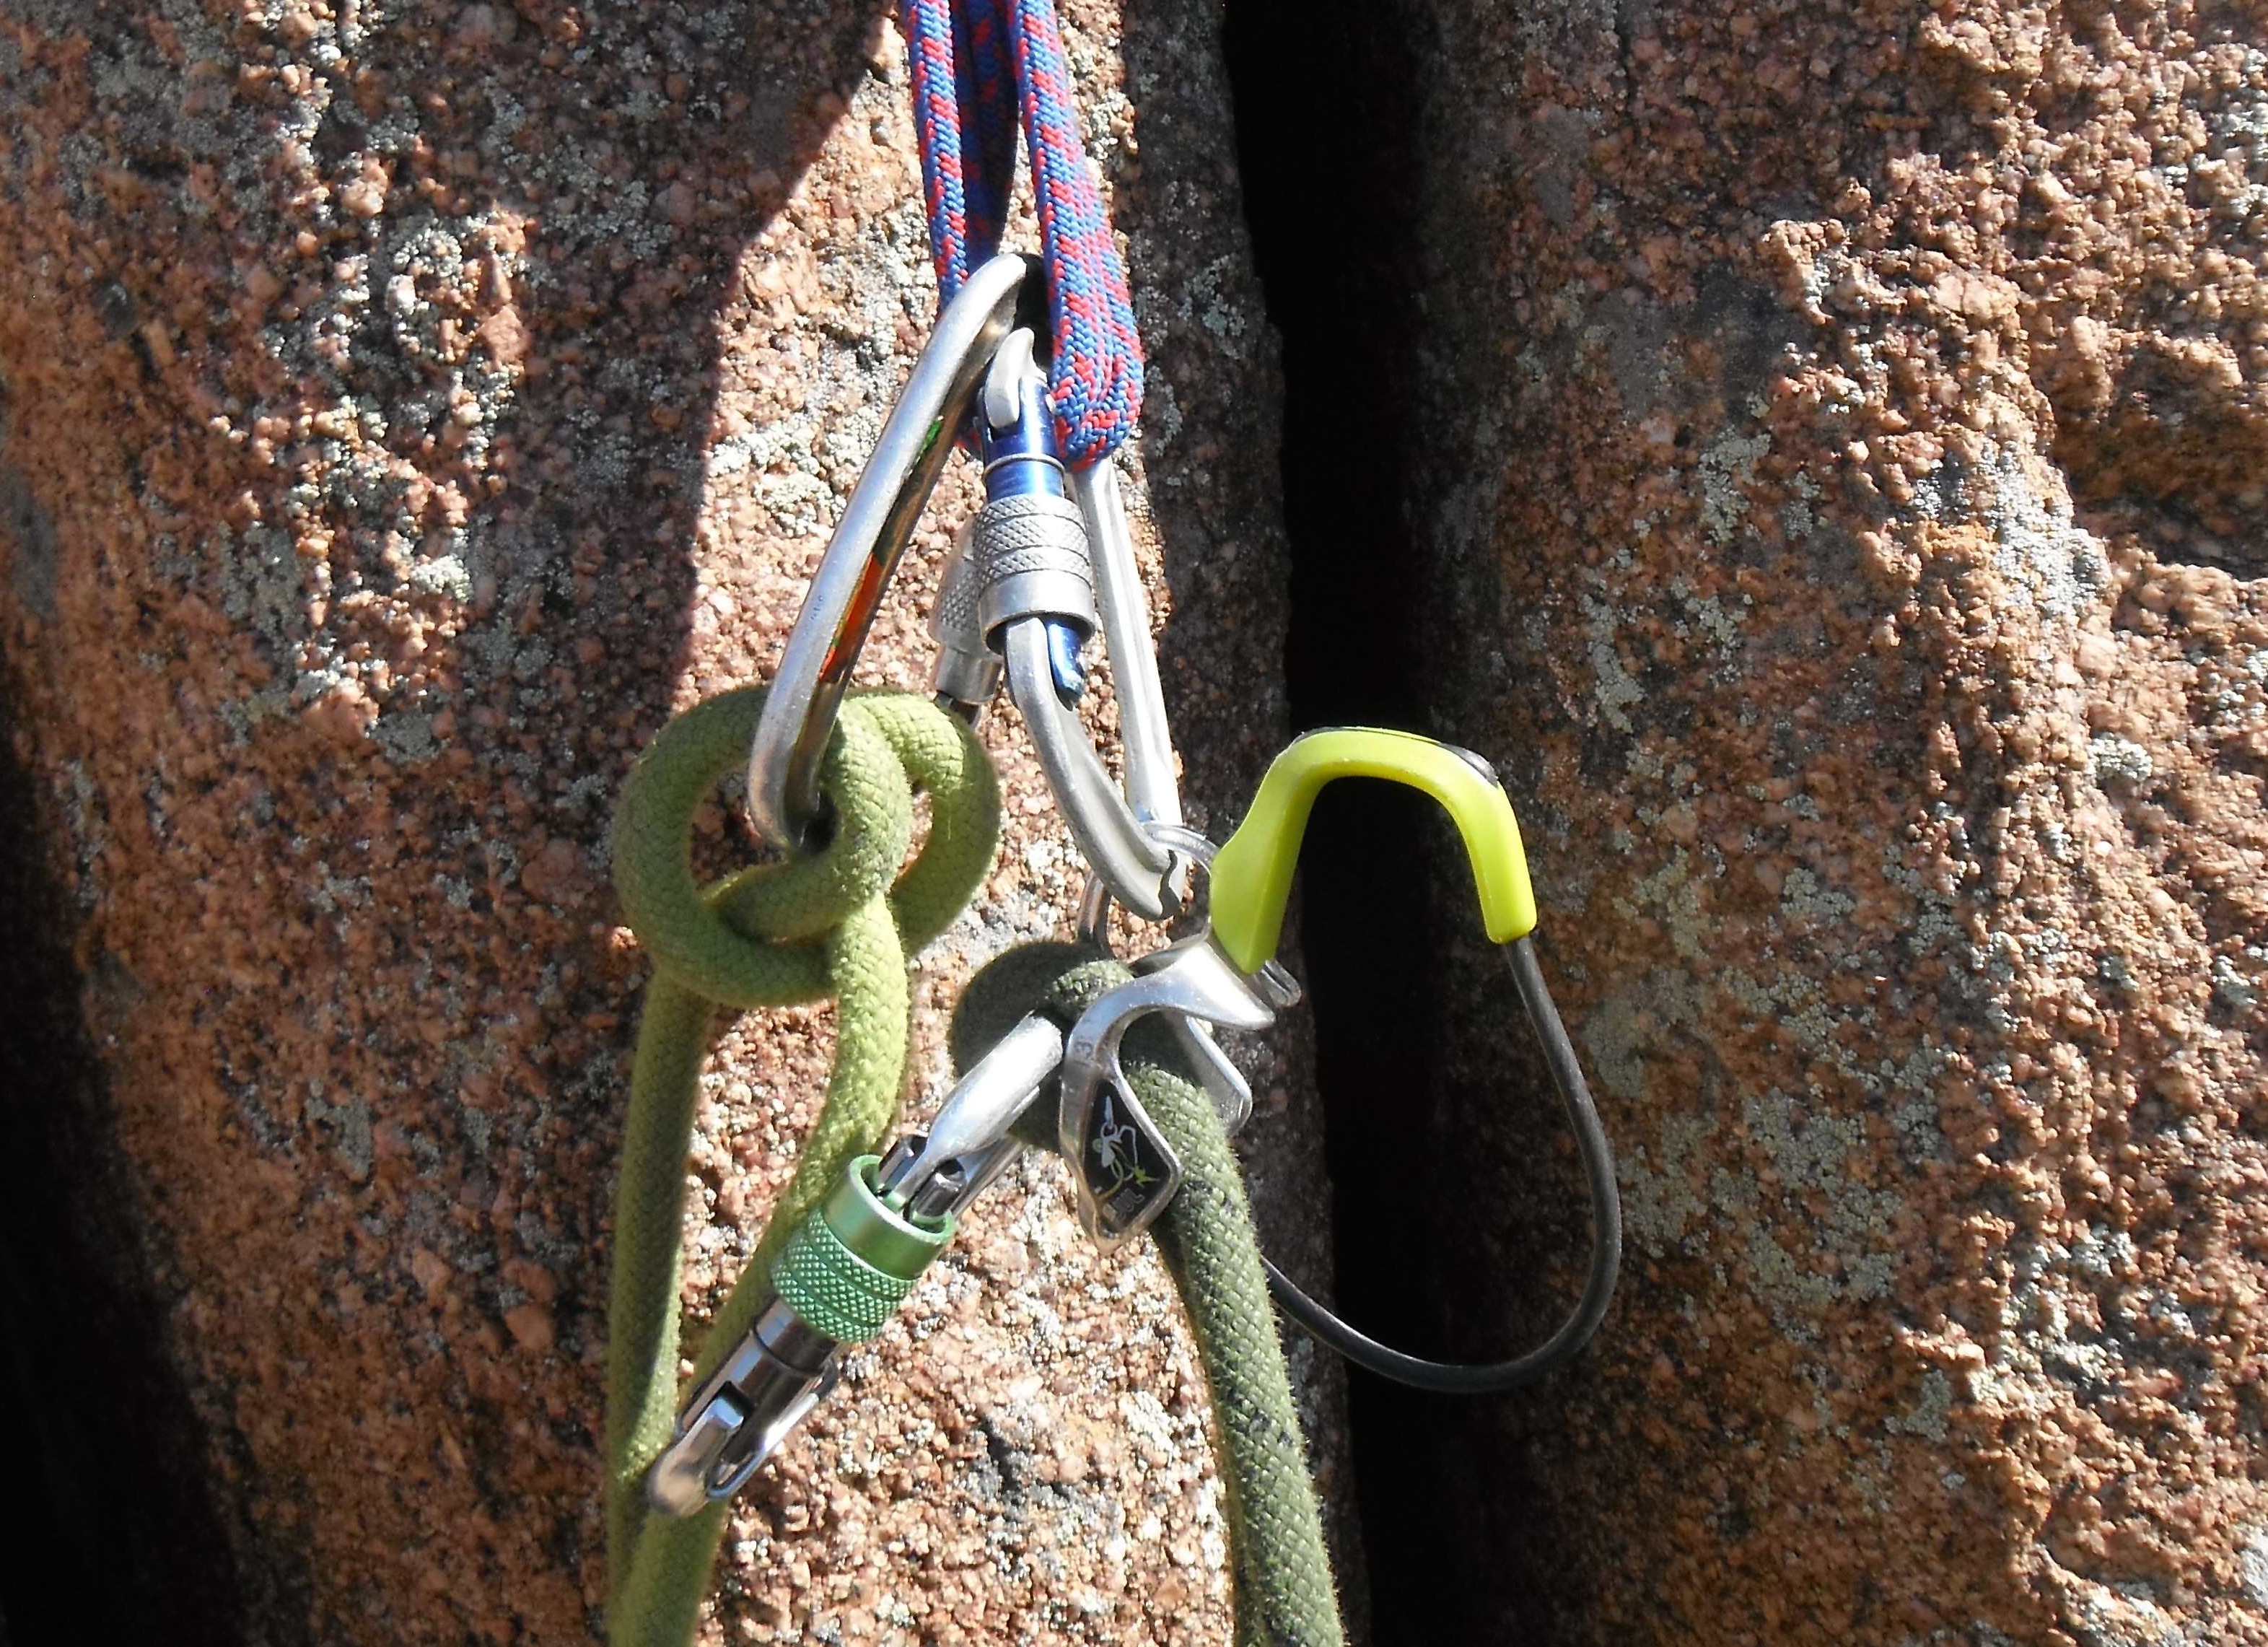 https://climbingzine.com/wp-content/uploads/2014/10/edelrid-in-action-belaying-from-top1.jpg